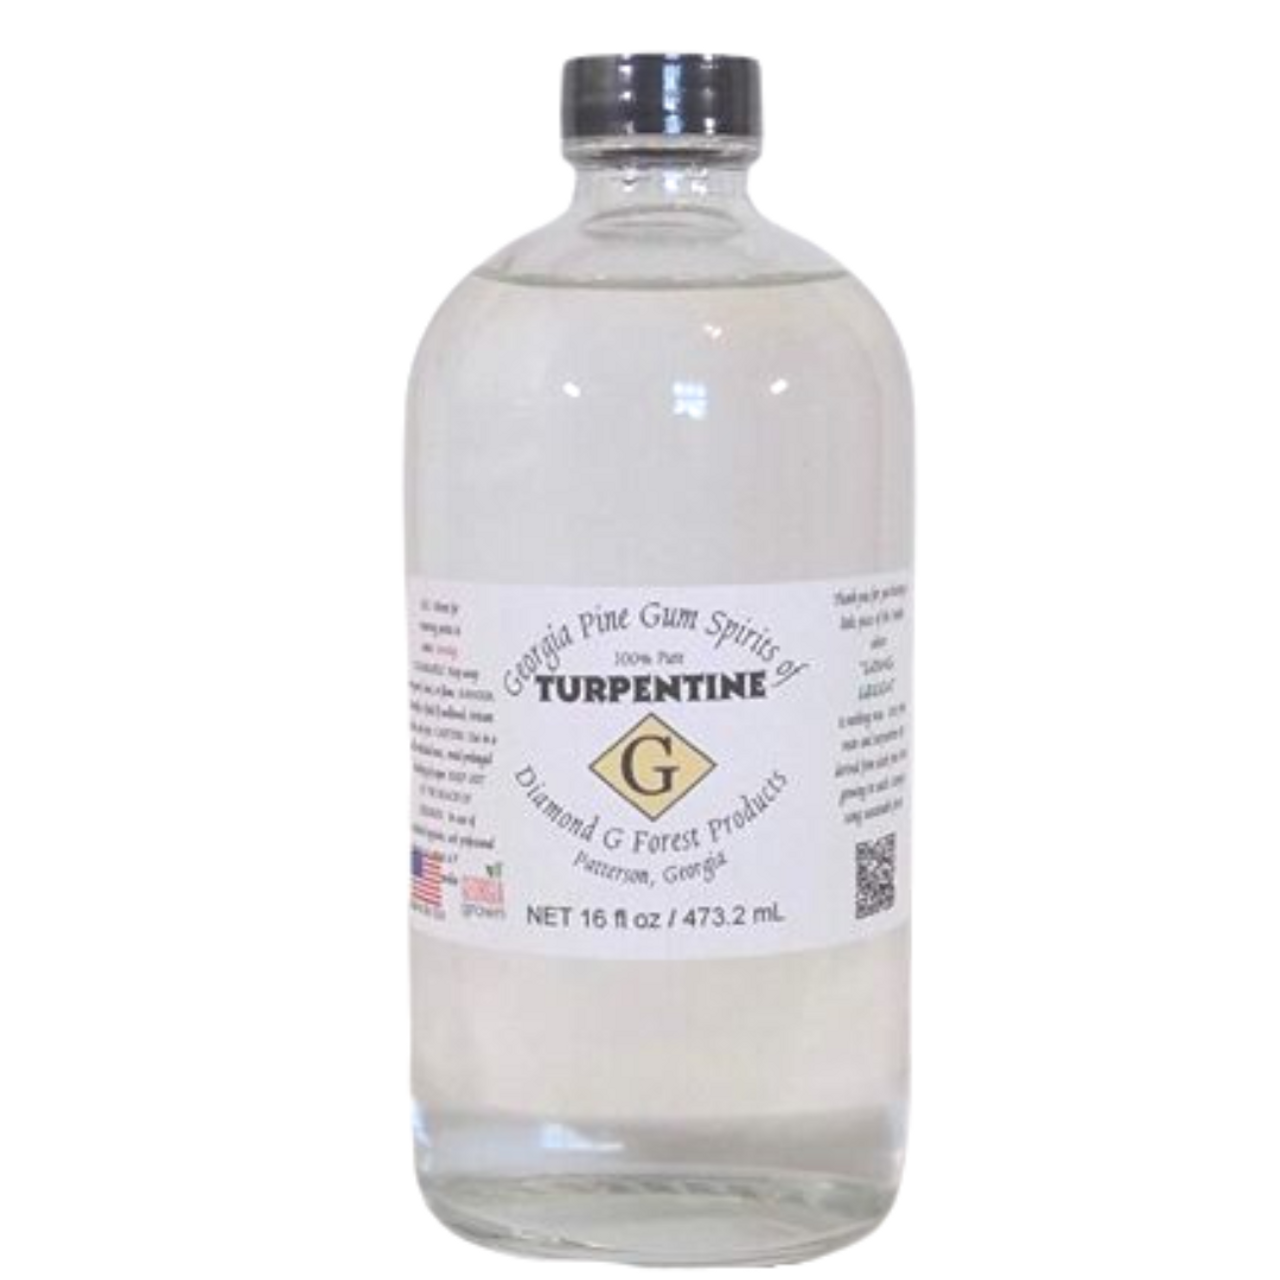 RealWildTurpentine - BOTTLE OF 4 OZ 100% GUM SPIRITS OF TURPENTINE